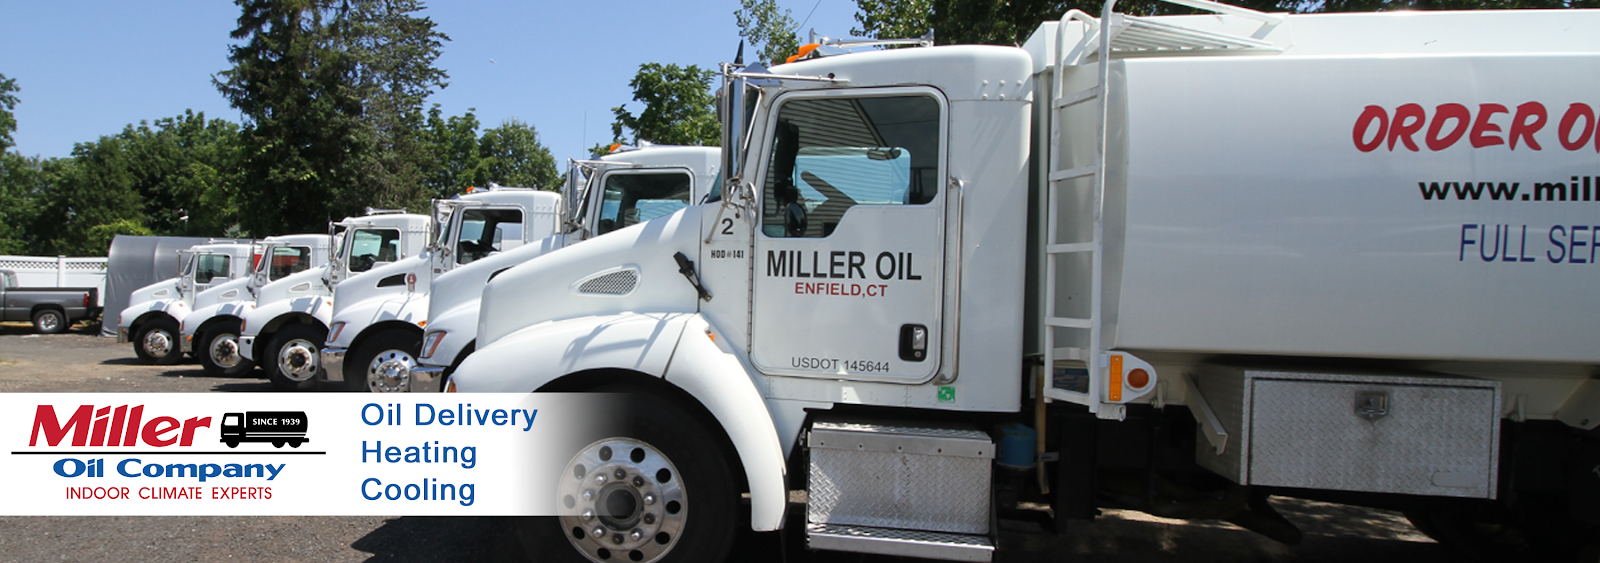 Miller Oil Company